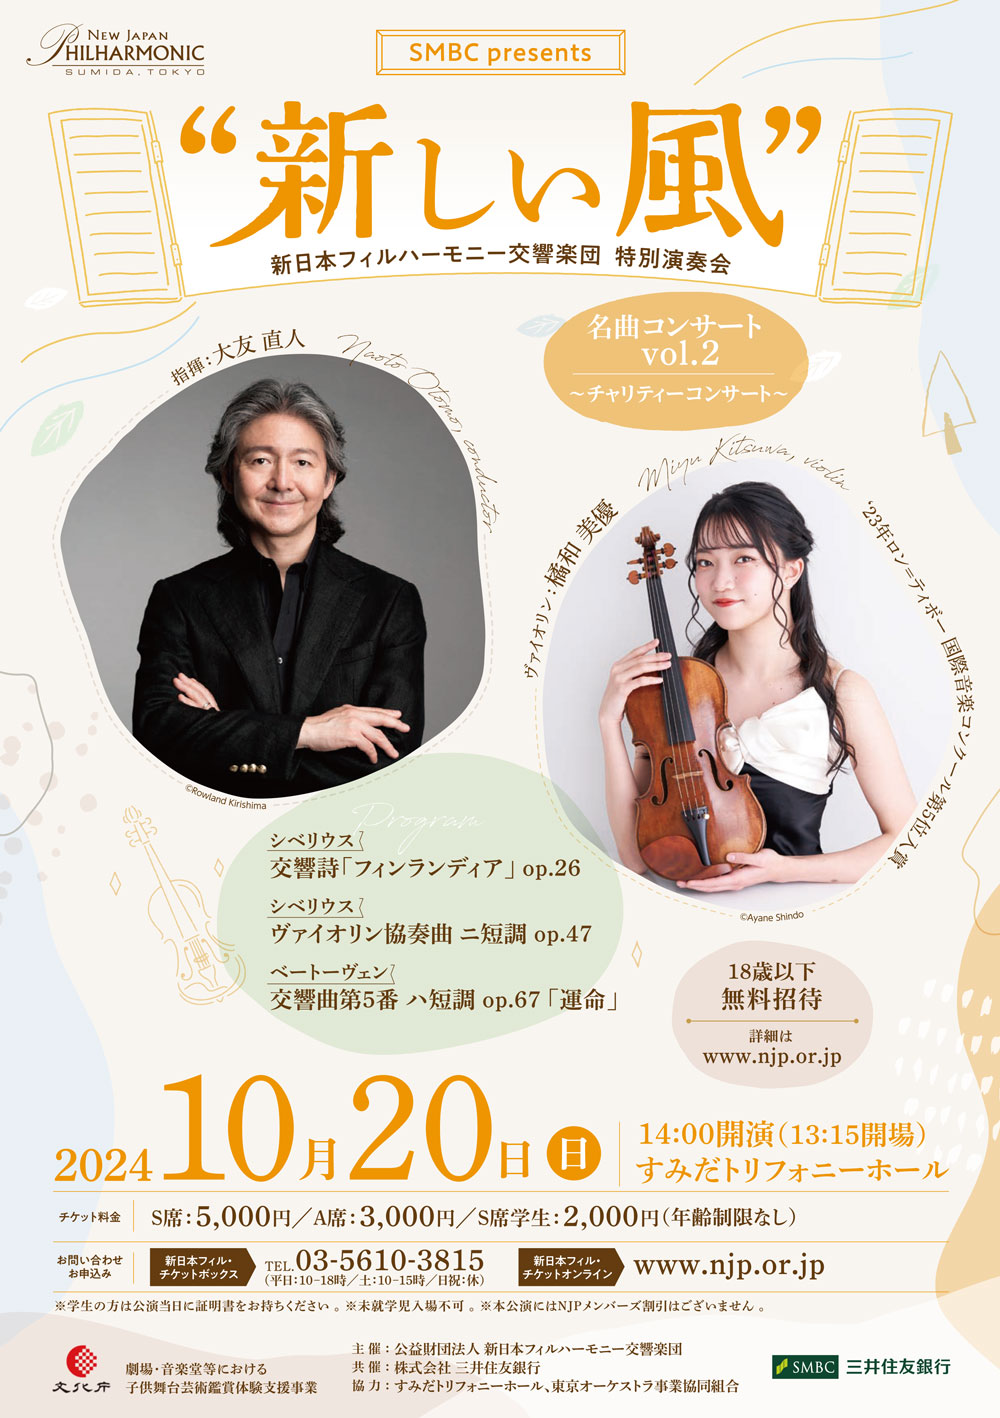 SMBC presents “新しい風”名曲コンサート vol.2～チャリティーコンサート～ | [公式]新日本フィルハーモニー交響楽団—New  Japan Philharmonic—